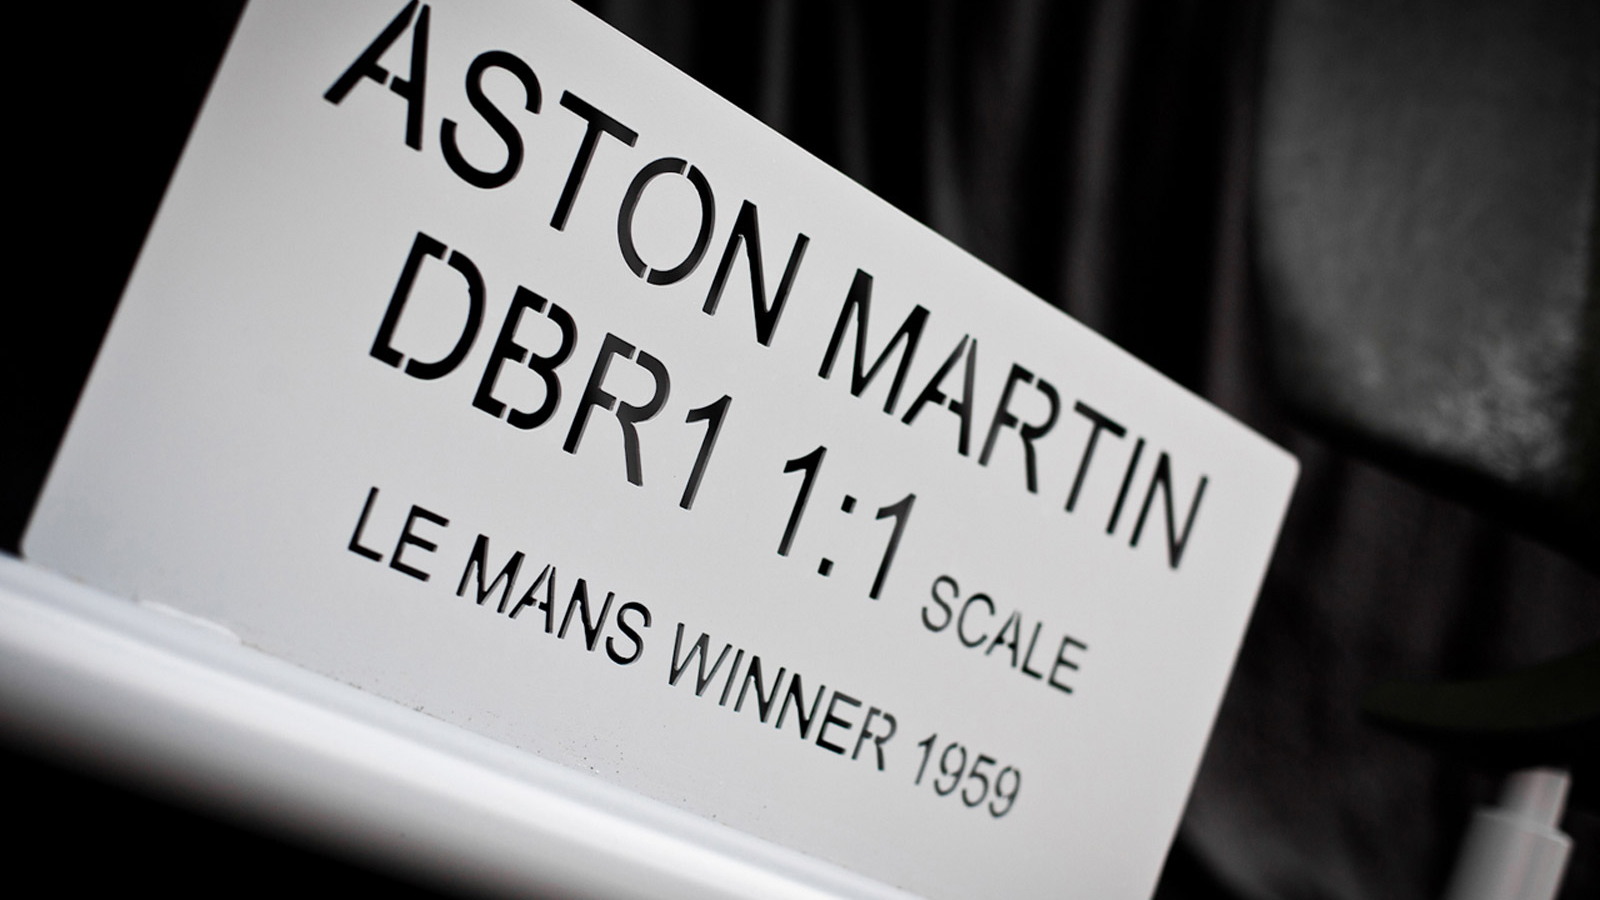 1959 Aston Martin DBR1 scale model - Image courtesy Evanta Motor Company